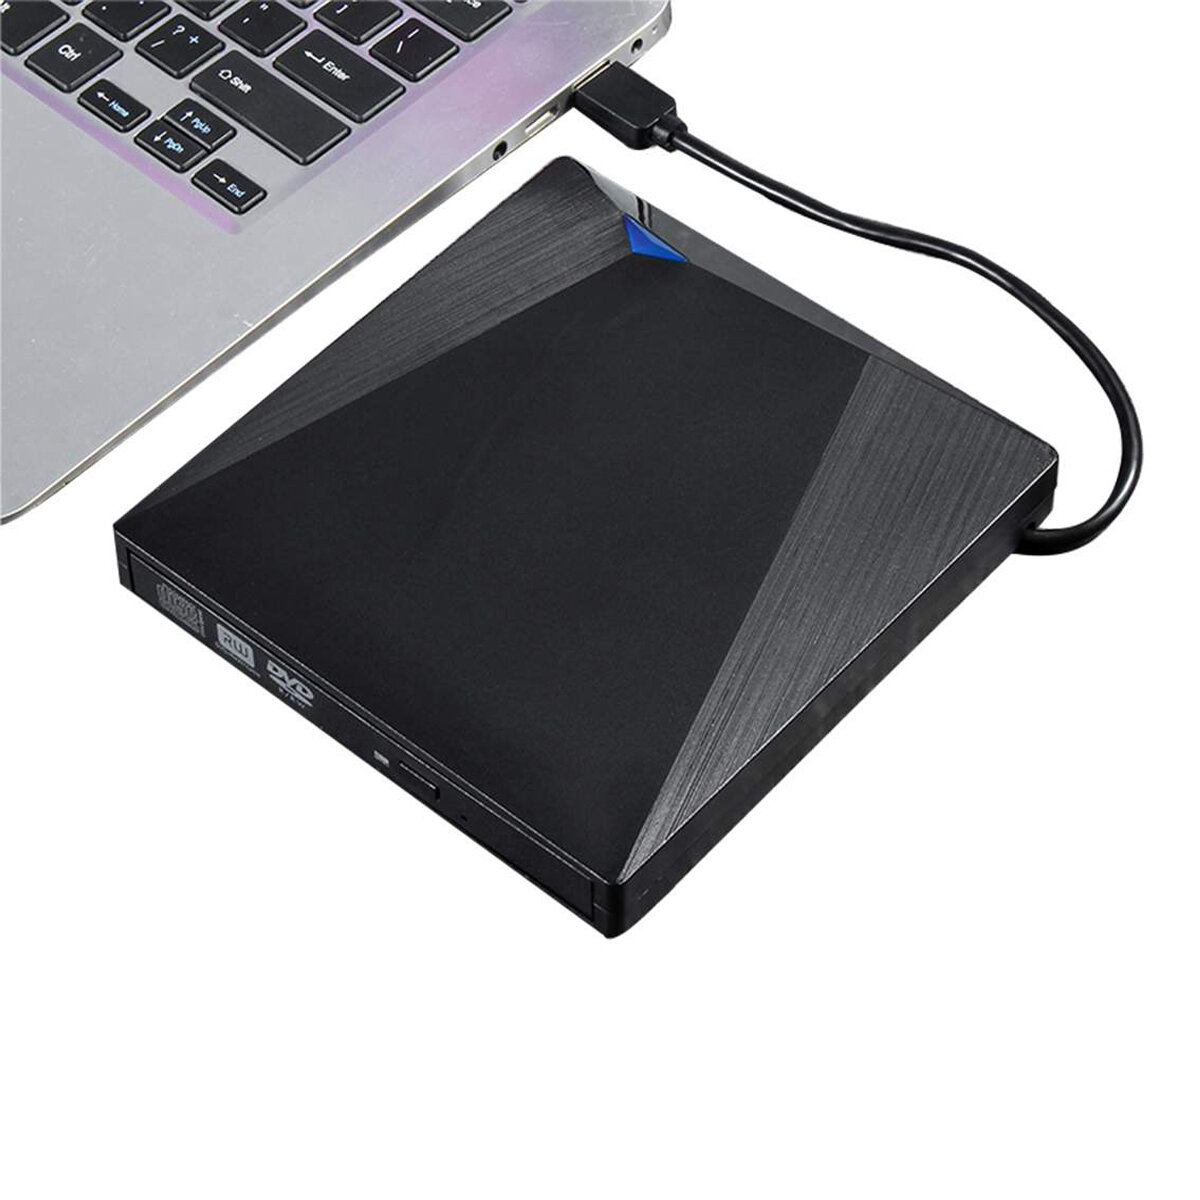 OTVIAP USB3.0 Rhombus External DVD Recorder Player Optical 